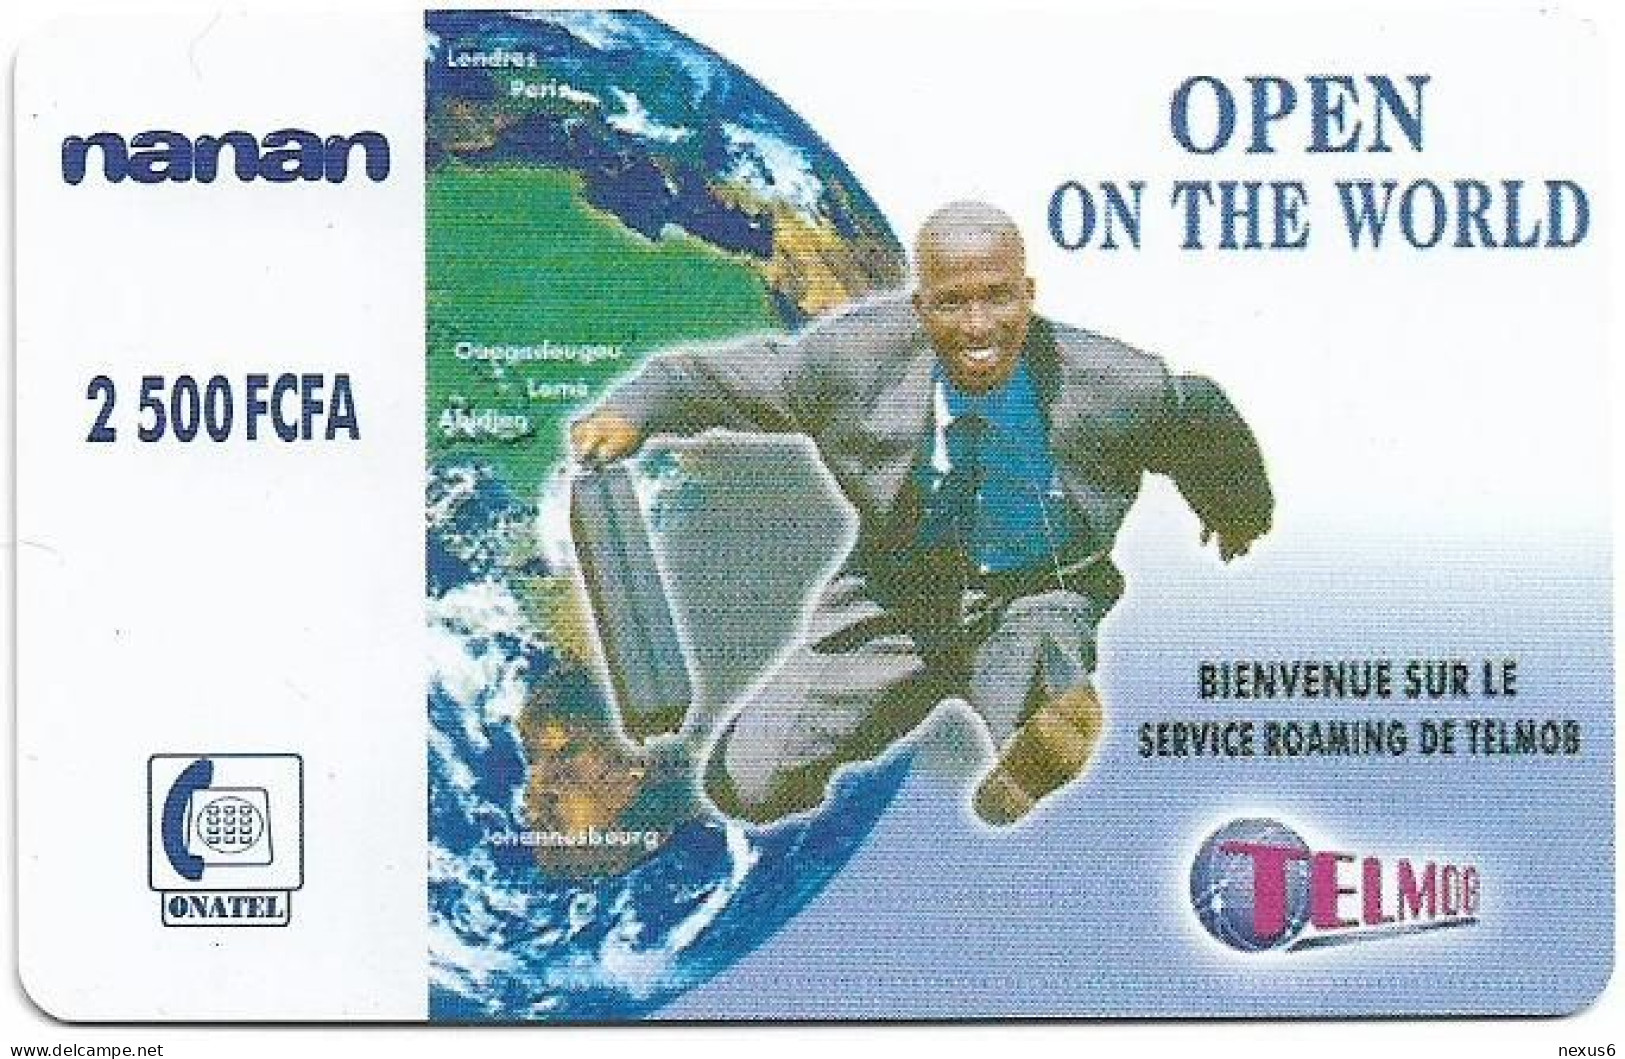 Burkina Faso - Onatel - Telmob-Nanan - Open On The World, GSM Refill 2.500CFA, Used - Burkina Faso